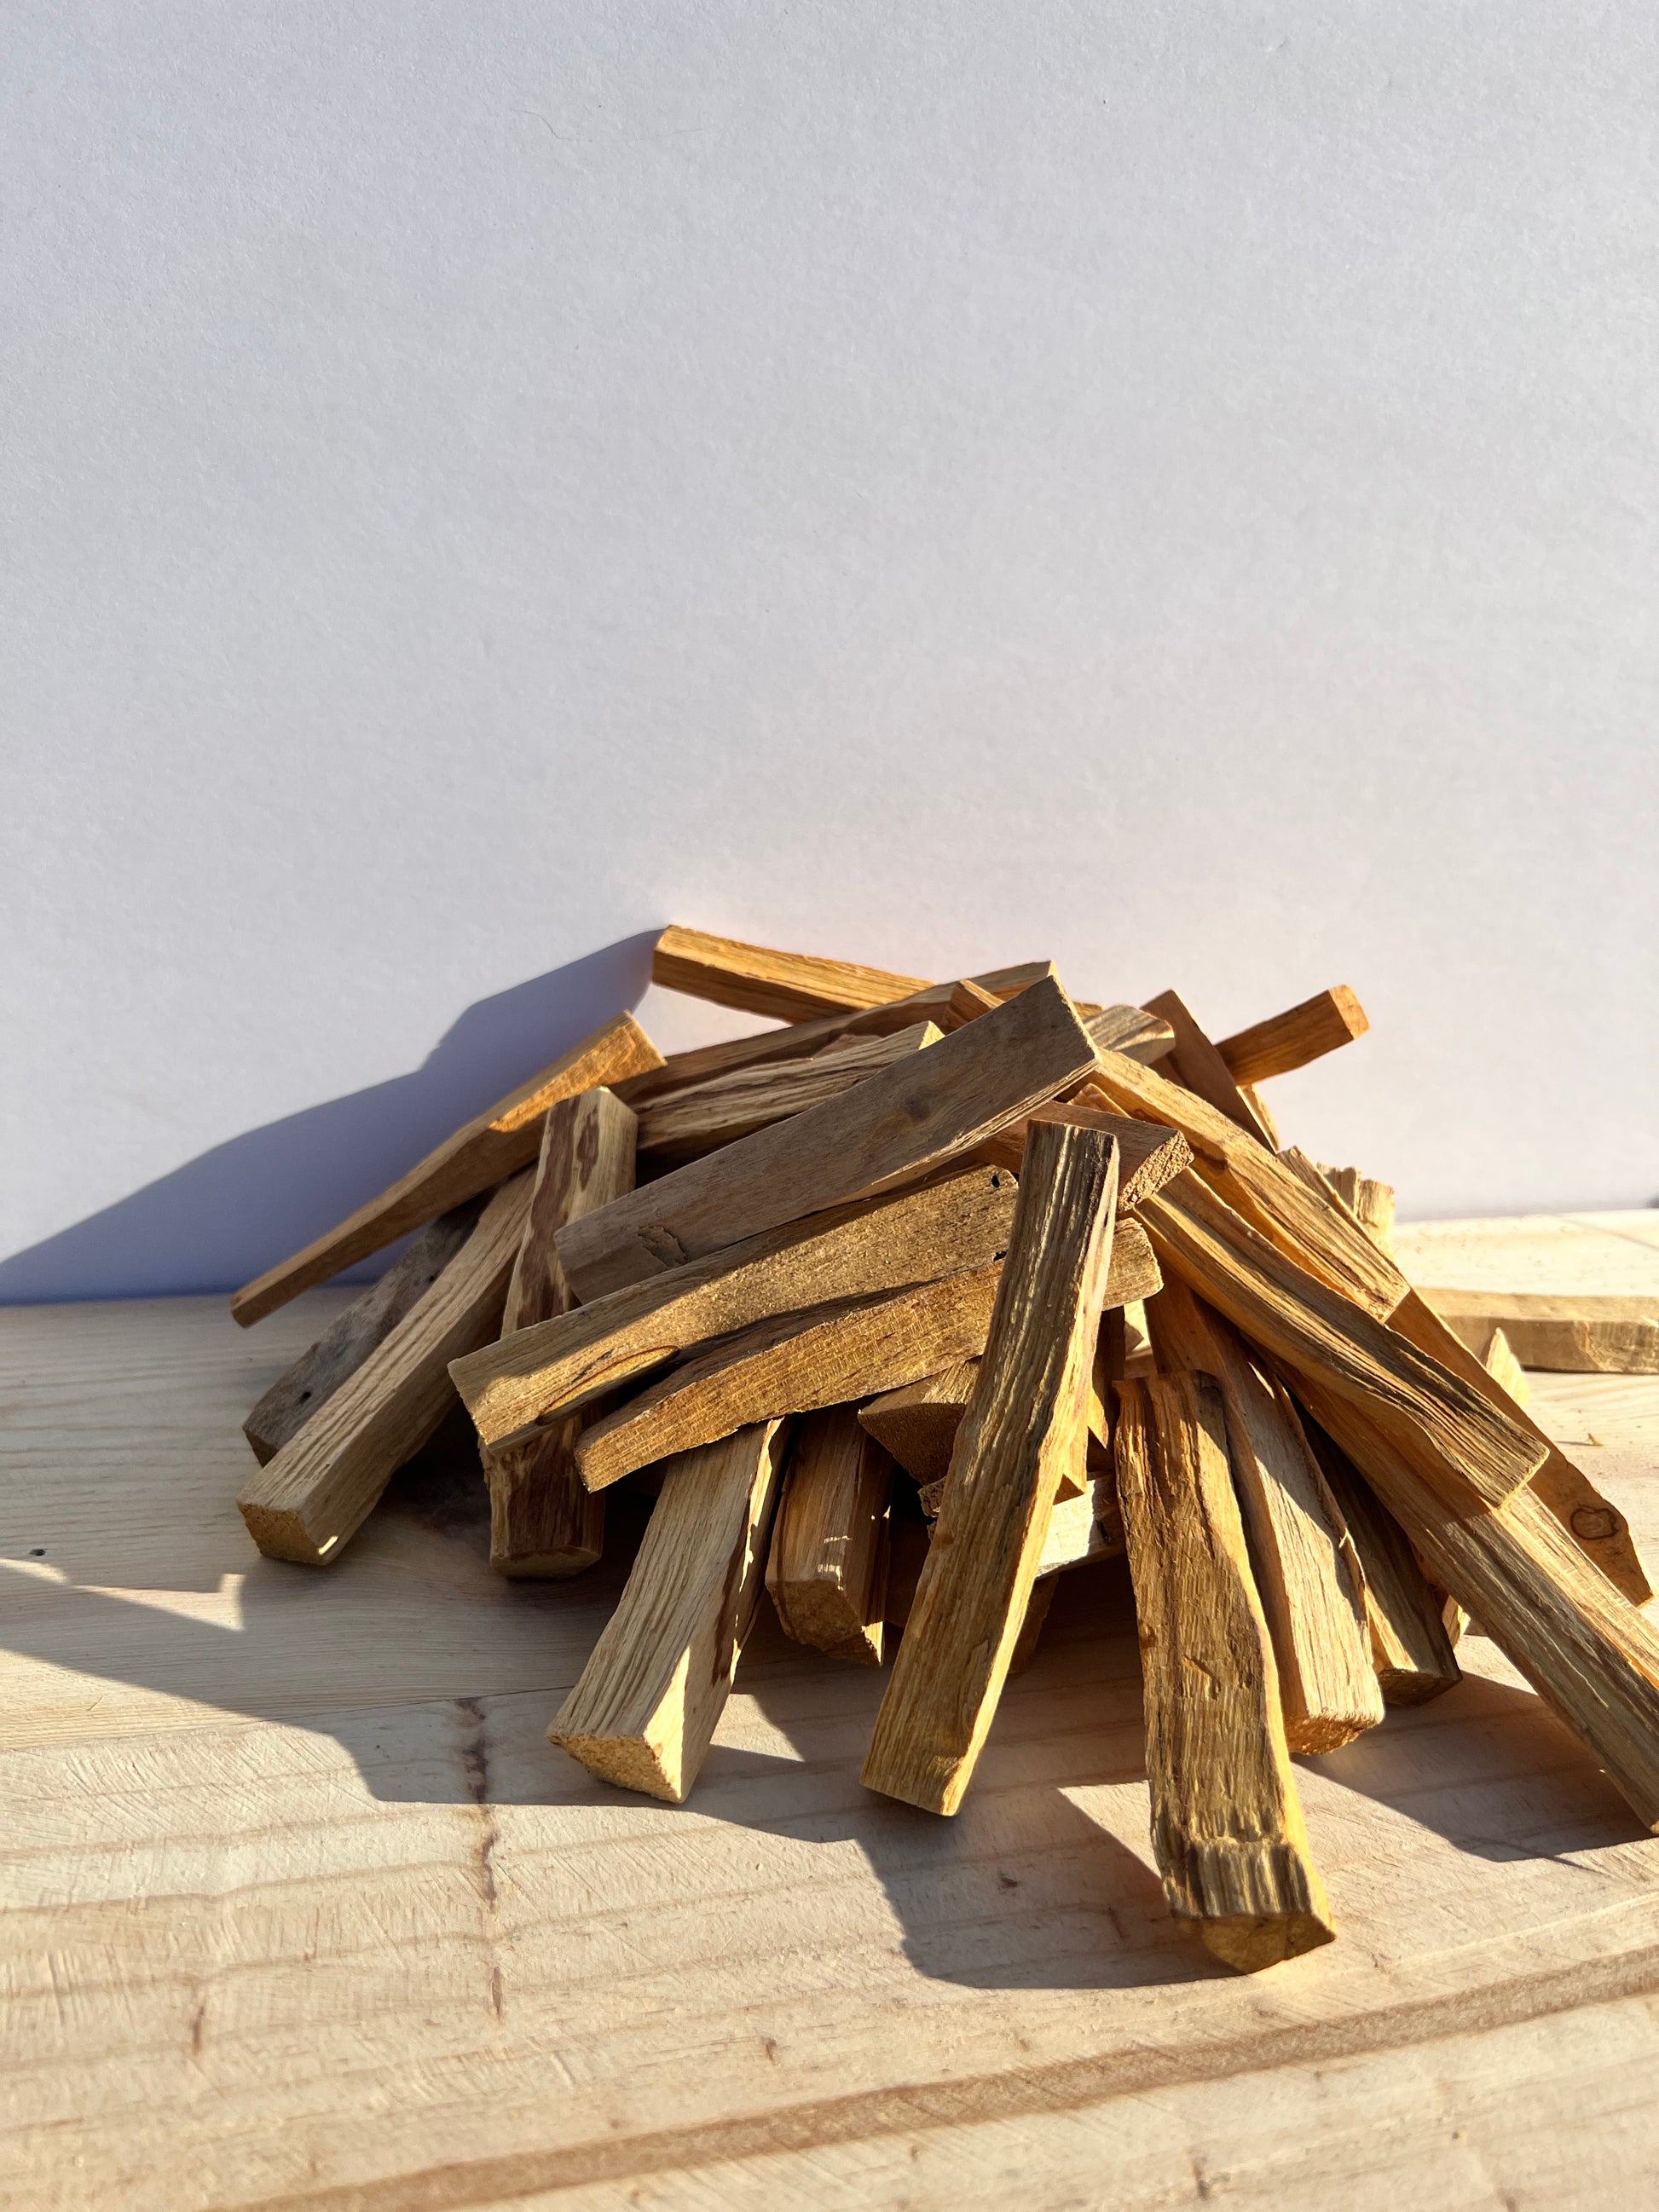 A pile of holy wood sticks.